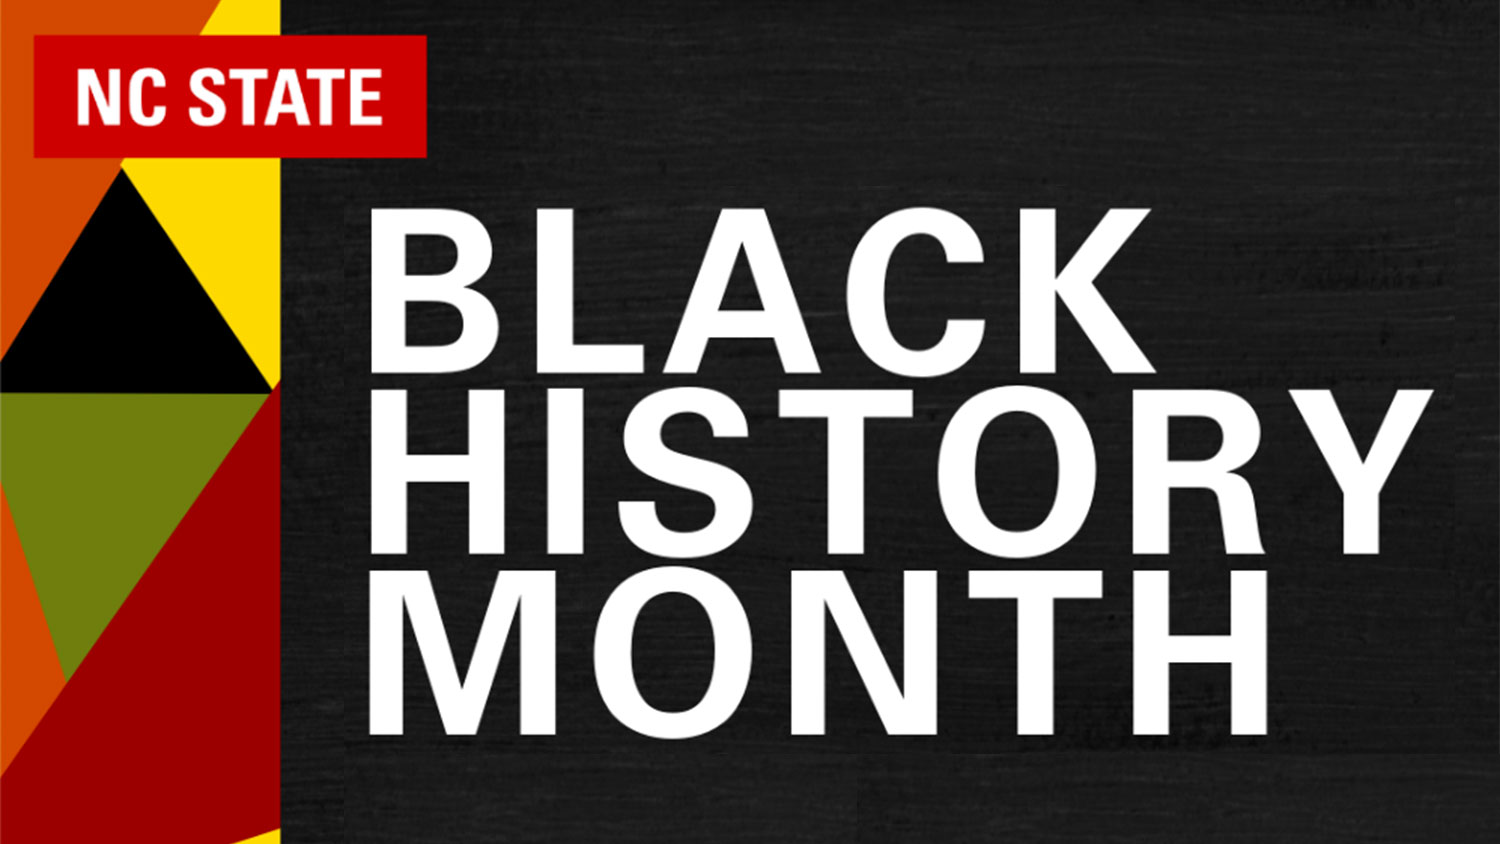 Black History Month 2019